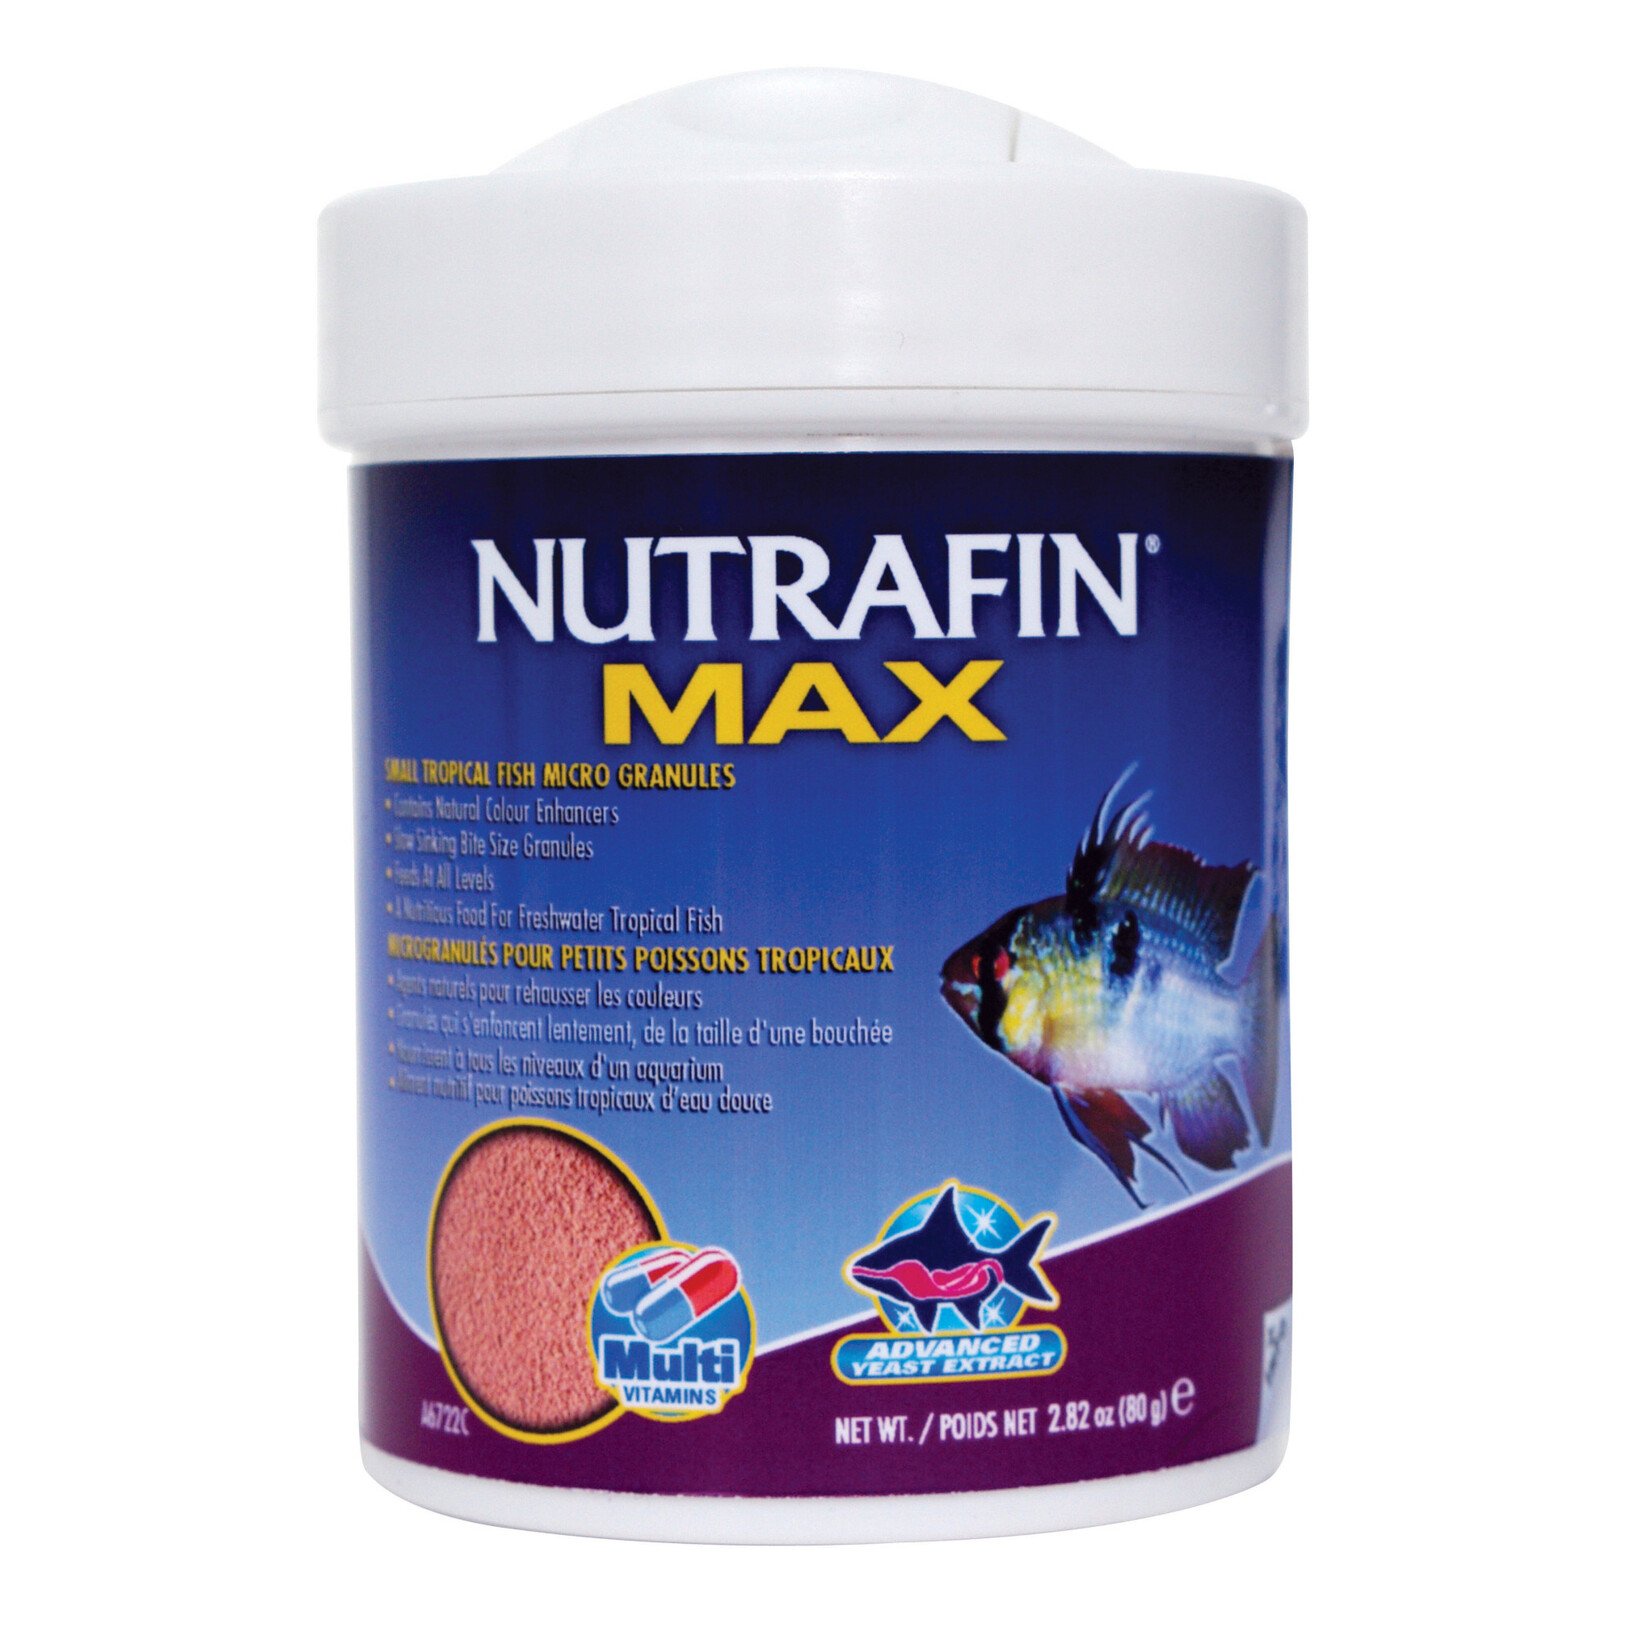 NUTRAFIN NUTRAFIN MAX MICROGRANULES POISSONS TROPICAUX 80 G